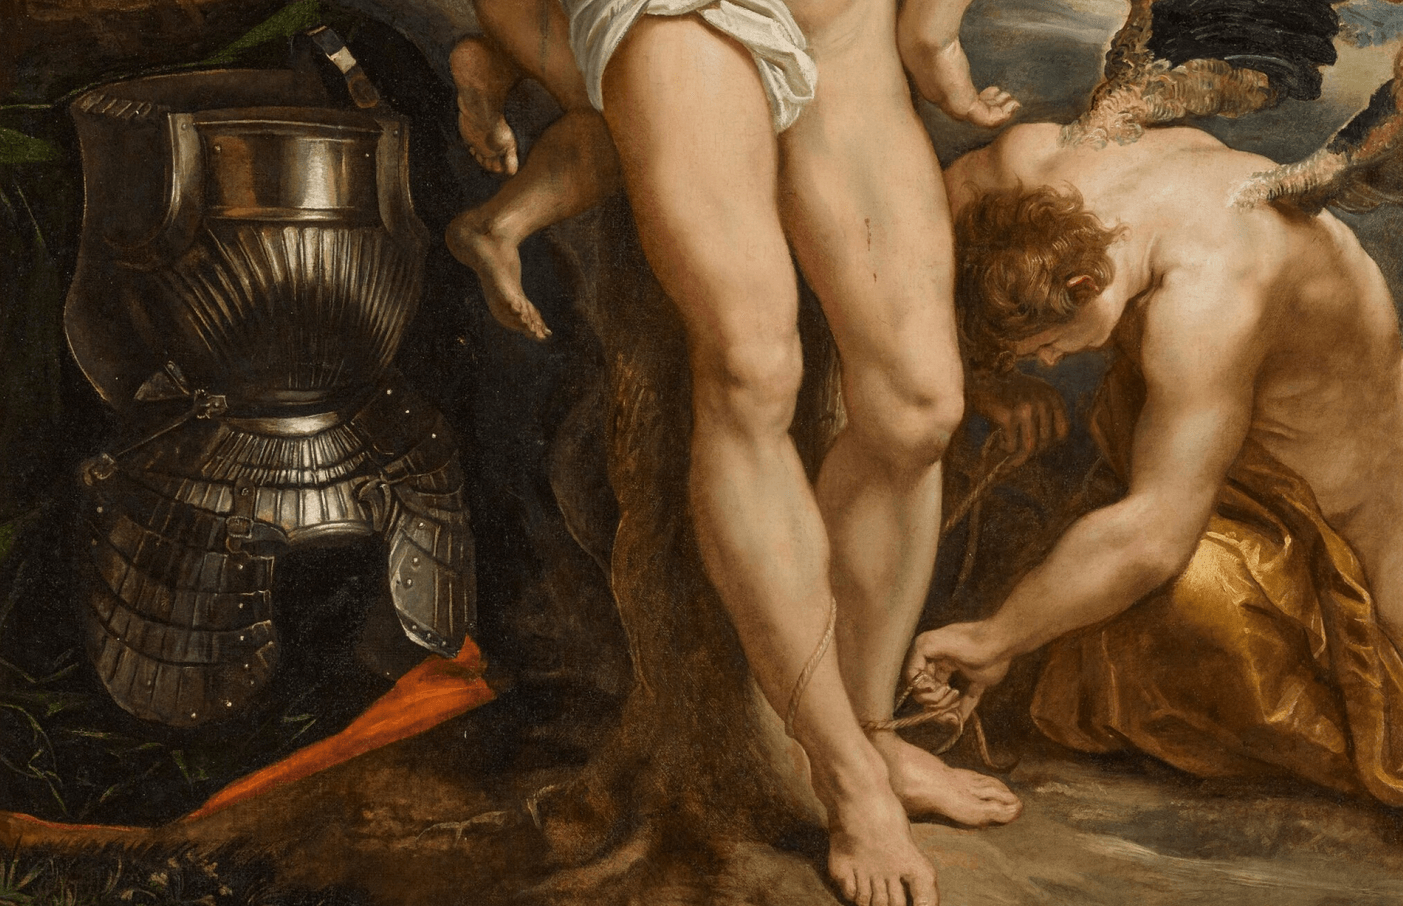 Rubens' "Saint Sebastian Tended by Two Angels"